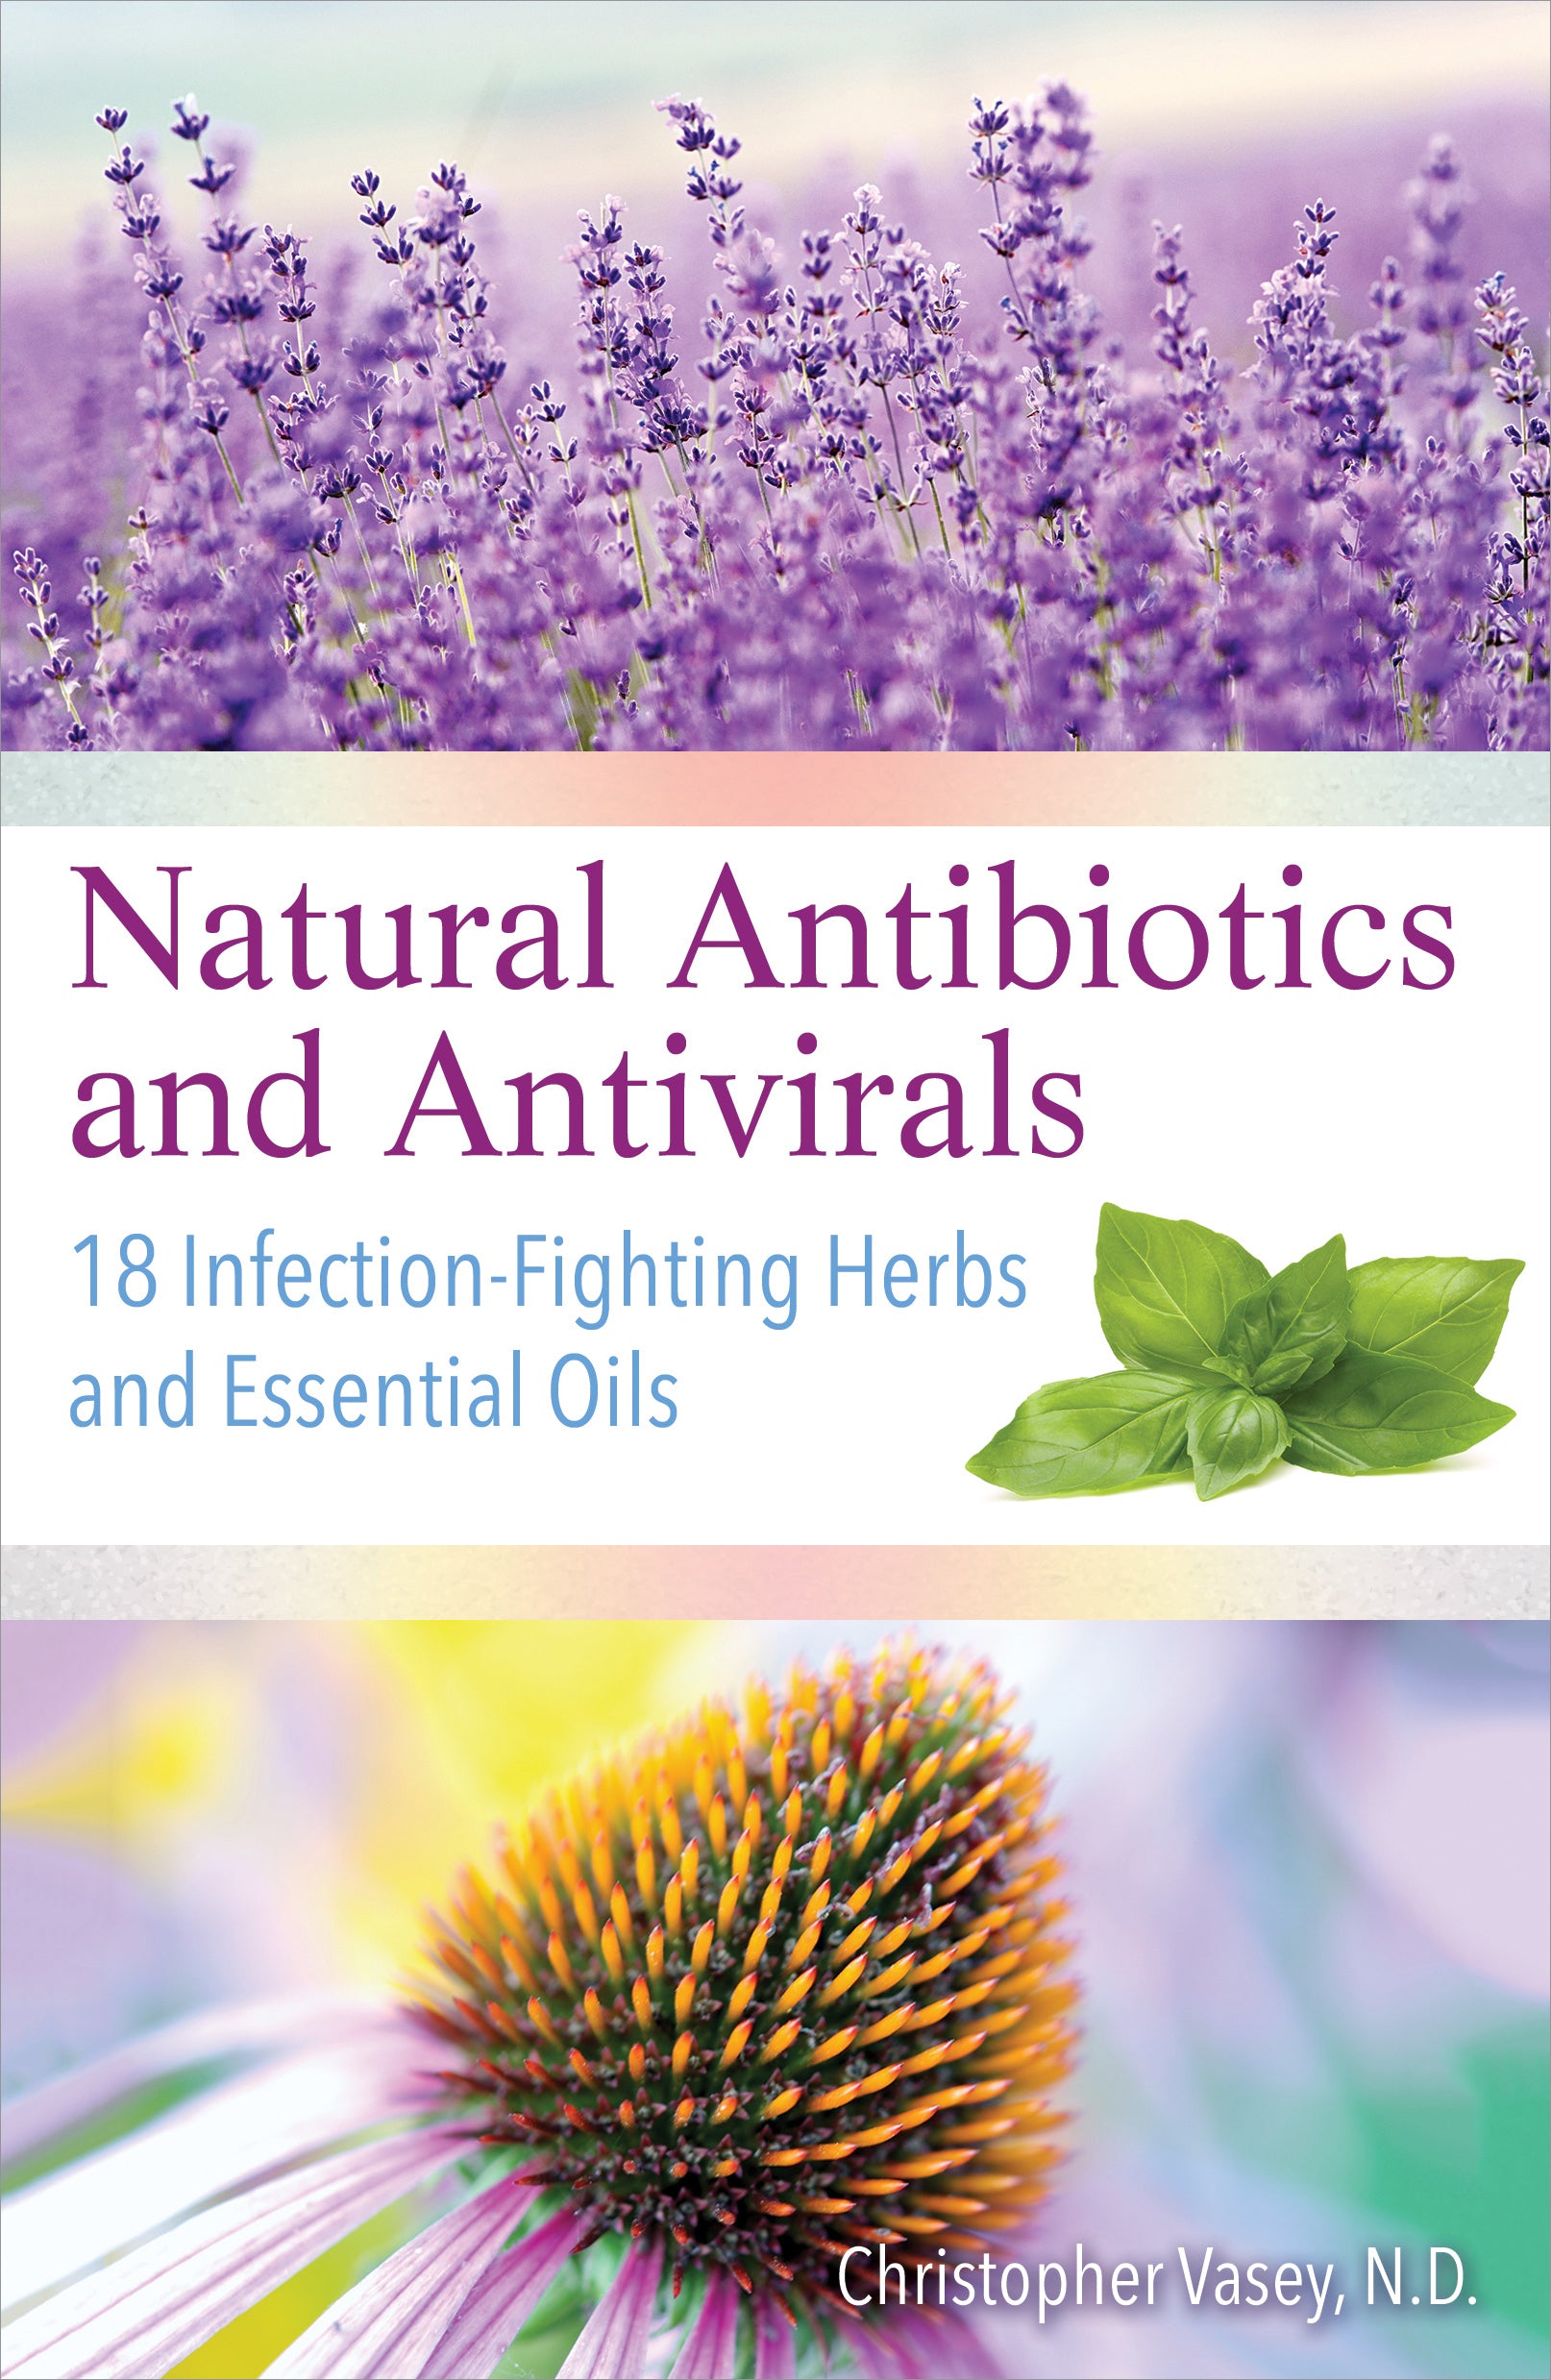 Natural Antibiotics and Antivirals by Christopher Vasey, N.D.